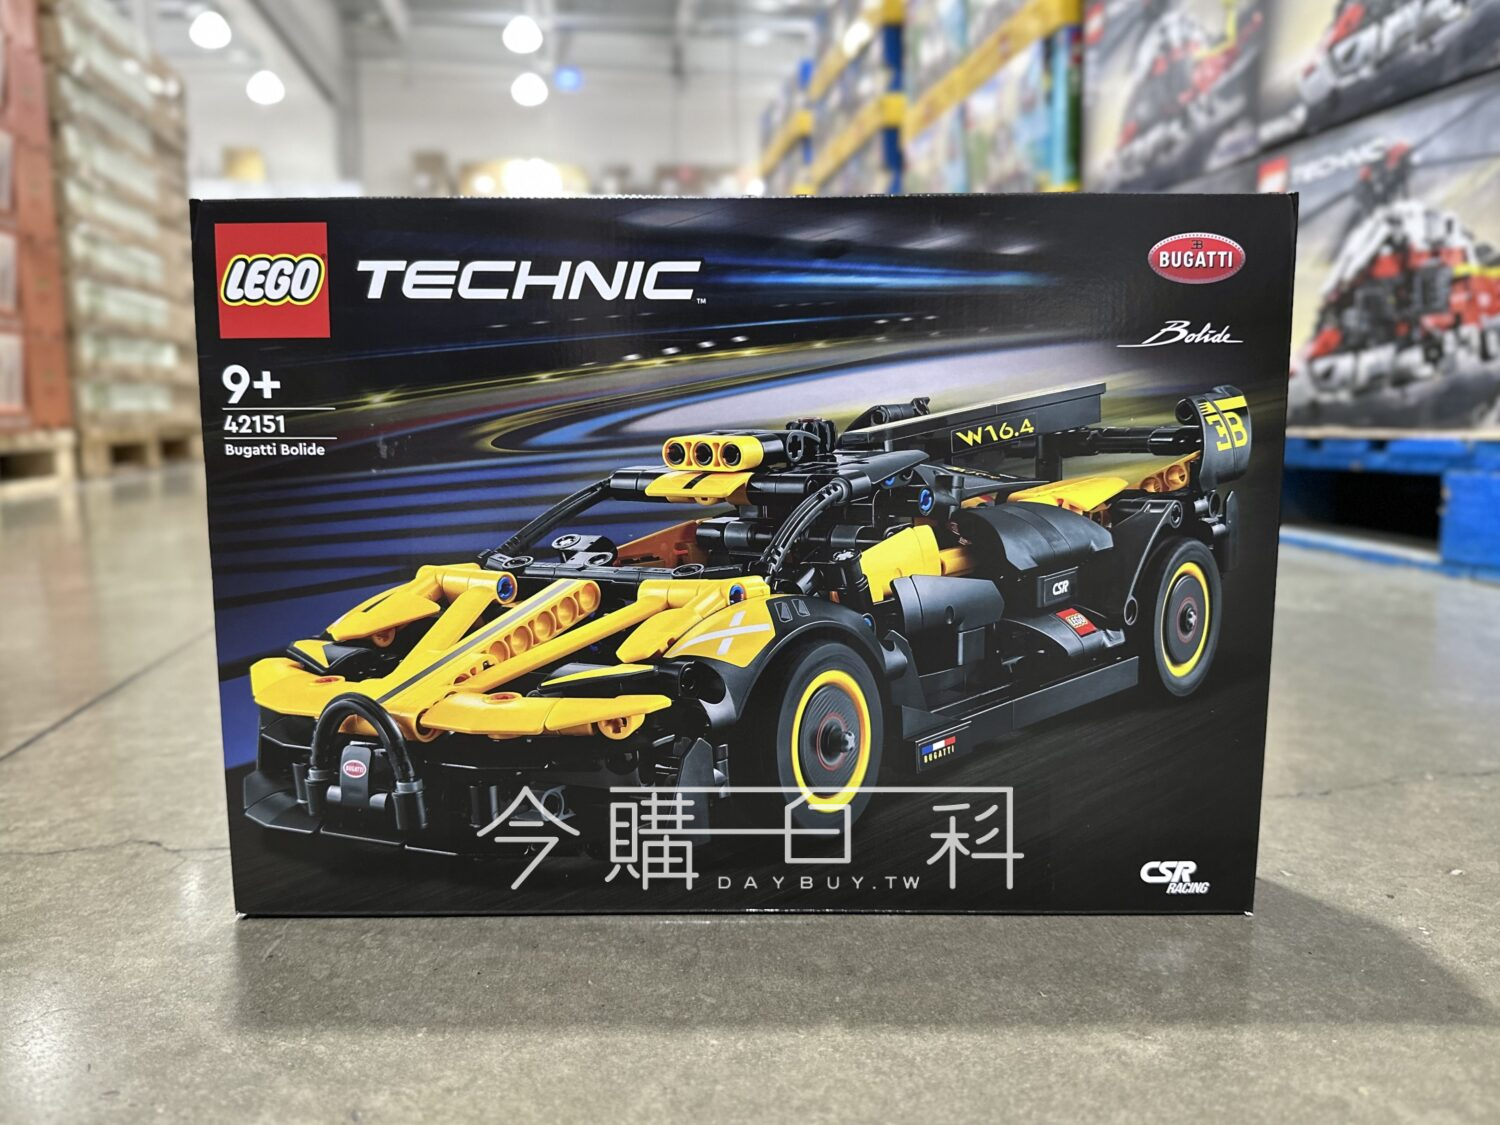 LEGO TECHNIC 42151 BUGATTI BOLIDE 科技系列賽車 #142655